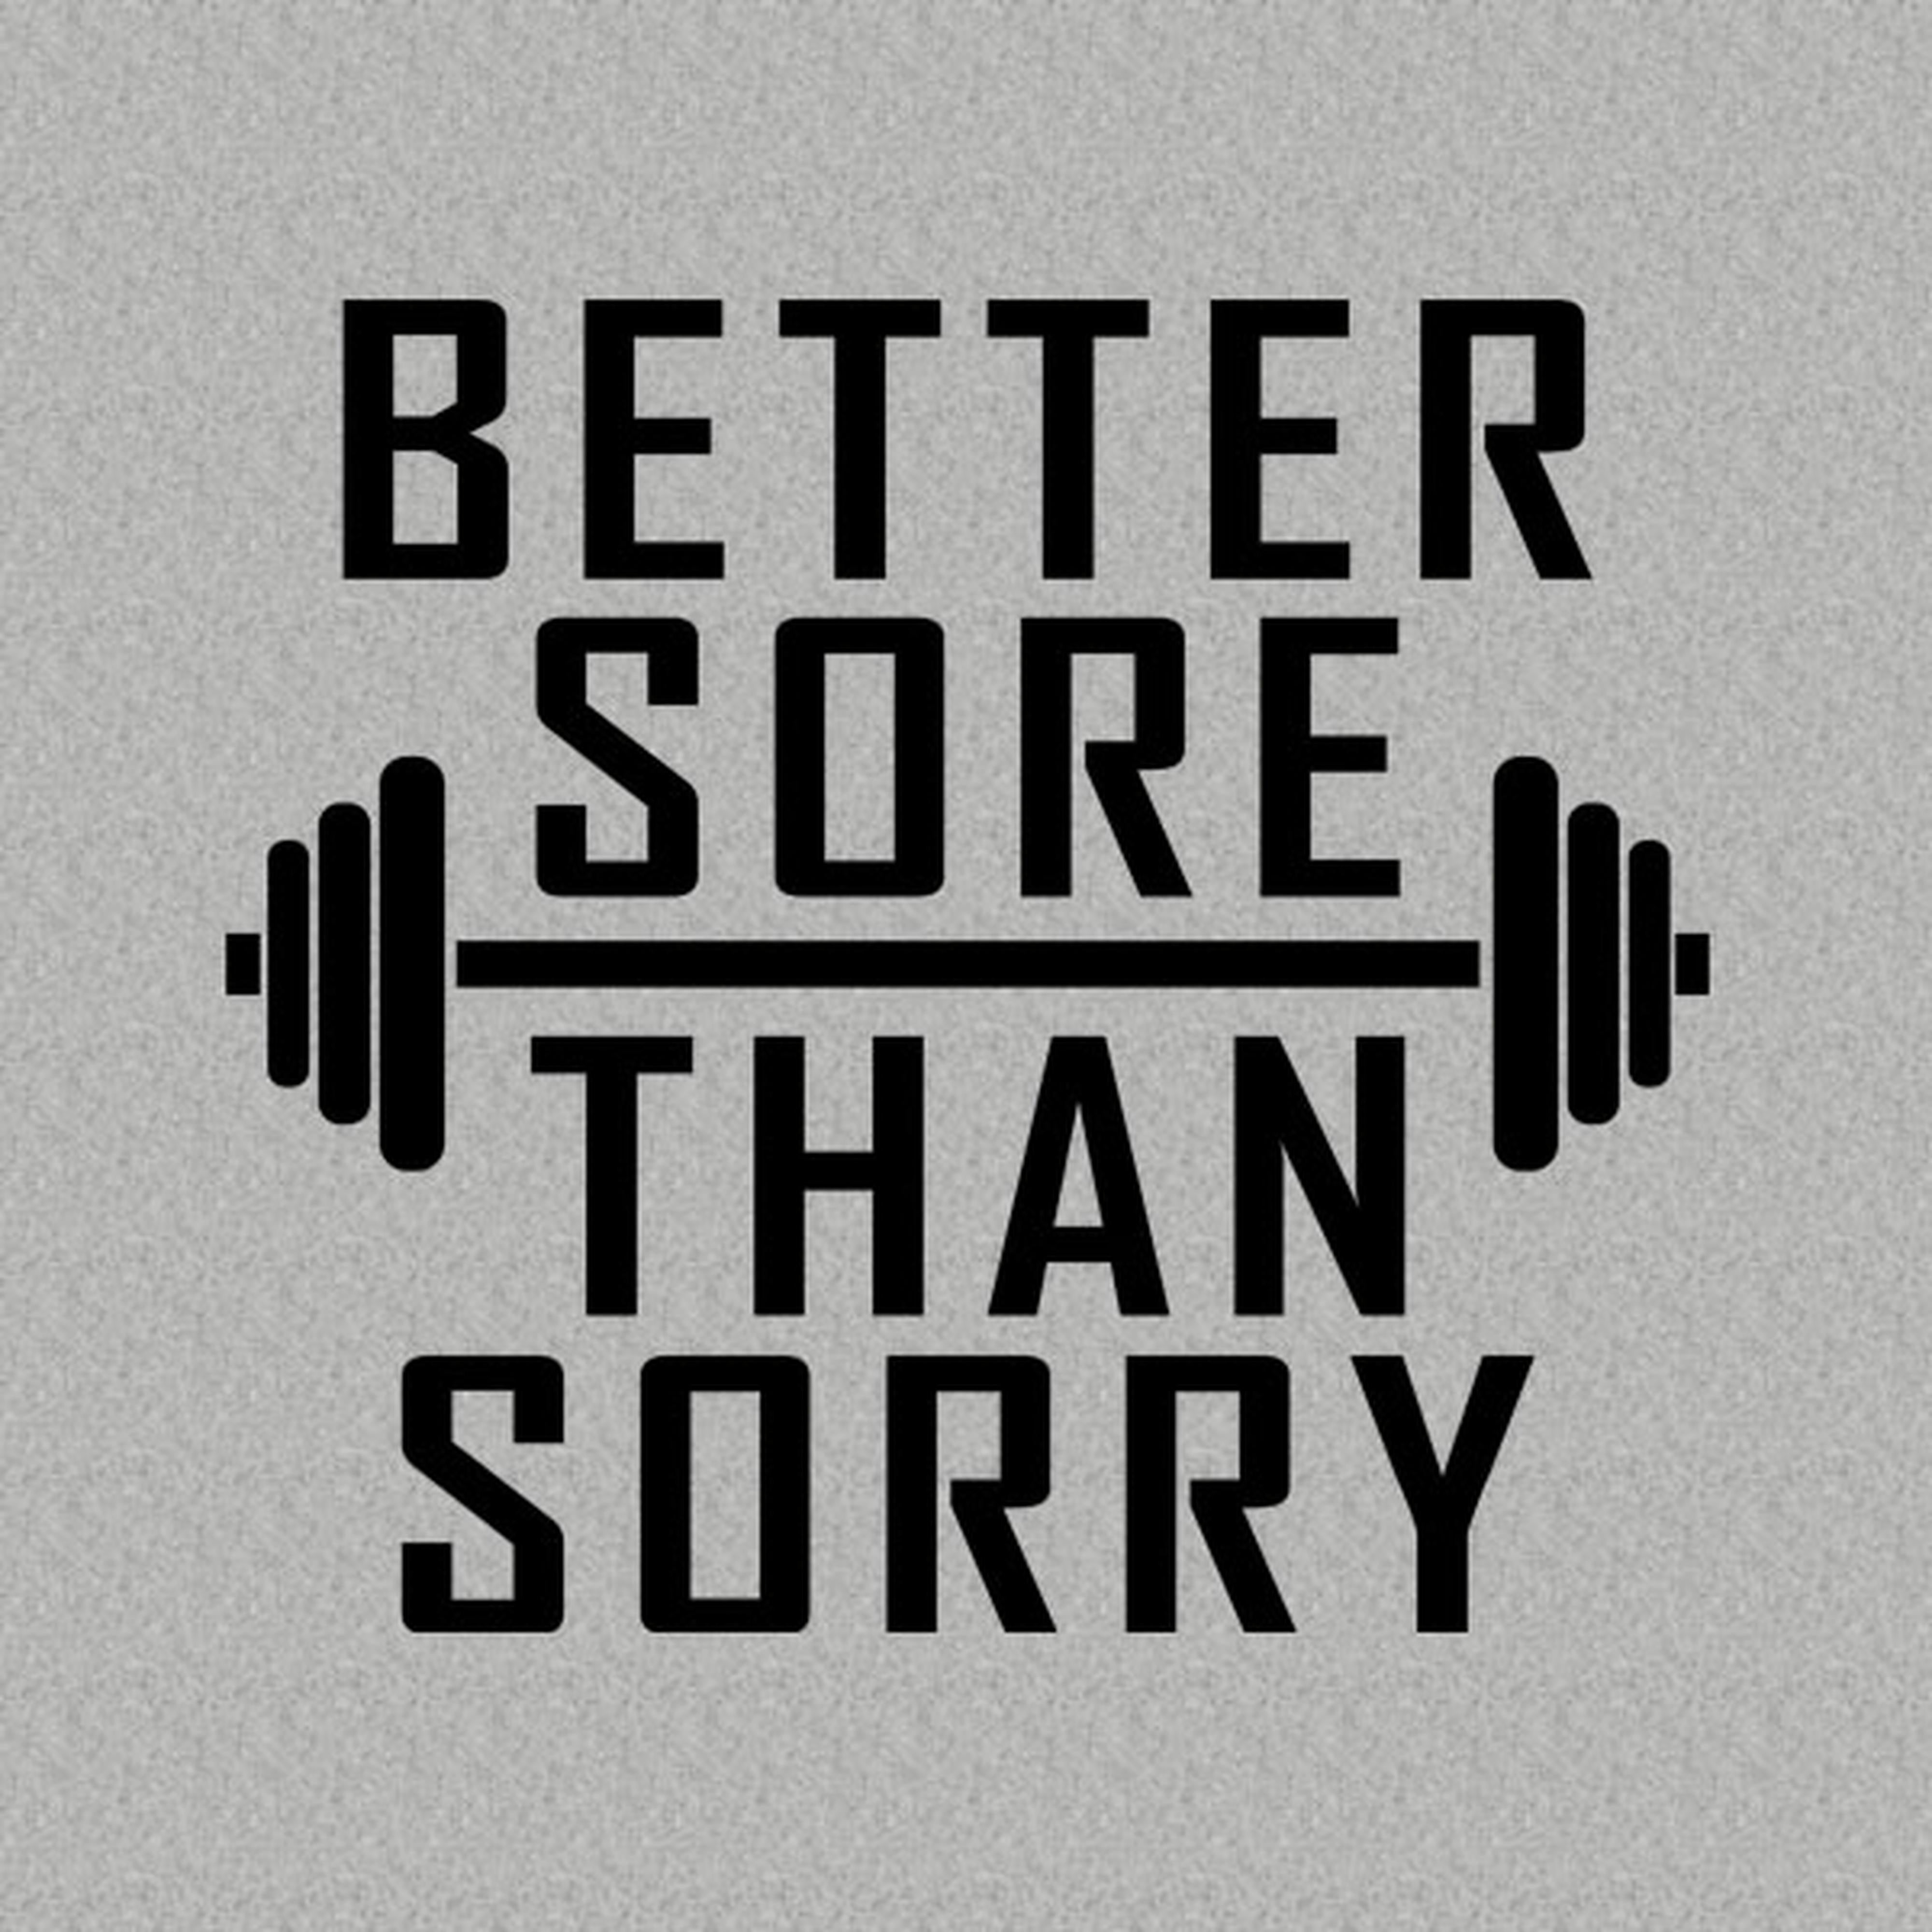 Better sore than sorry - T-shirt